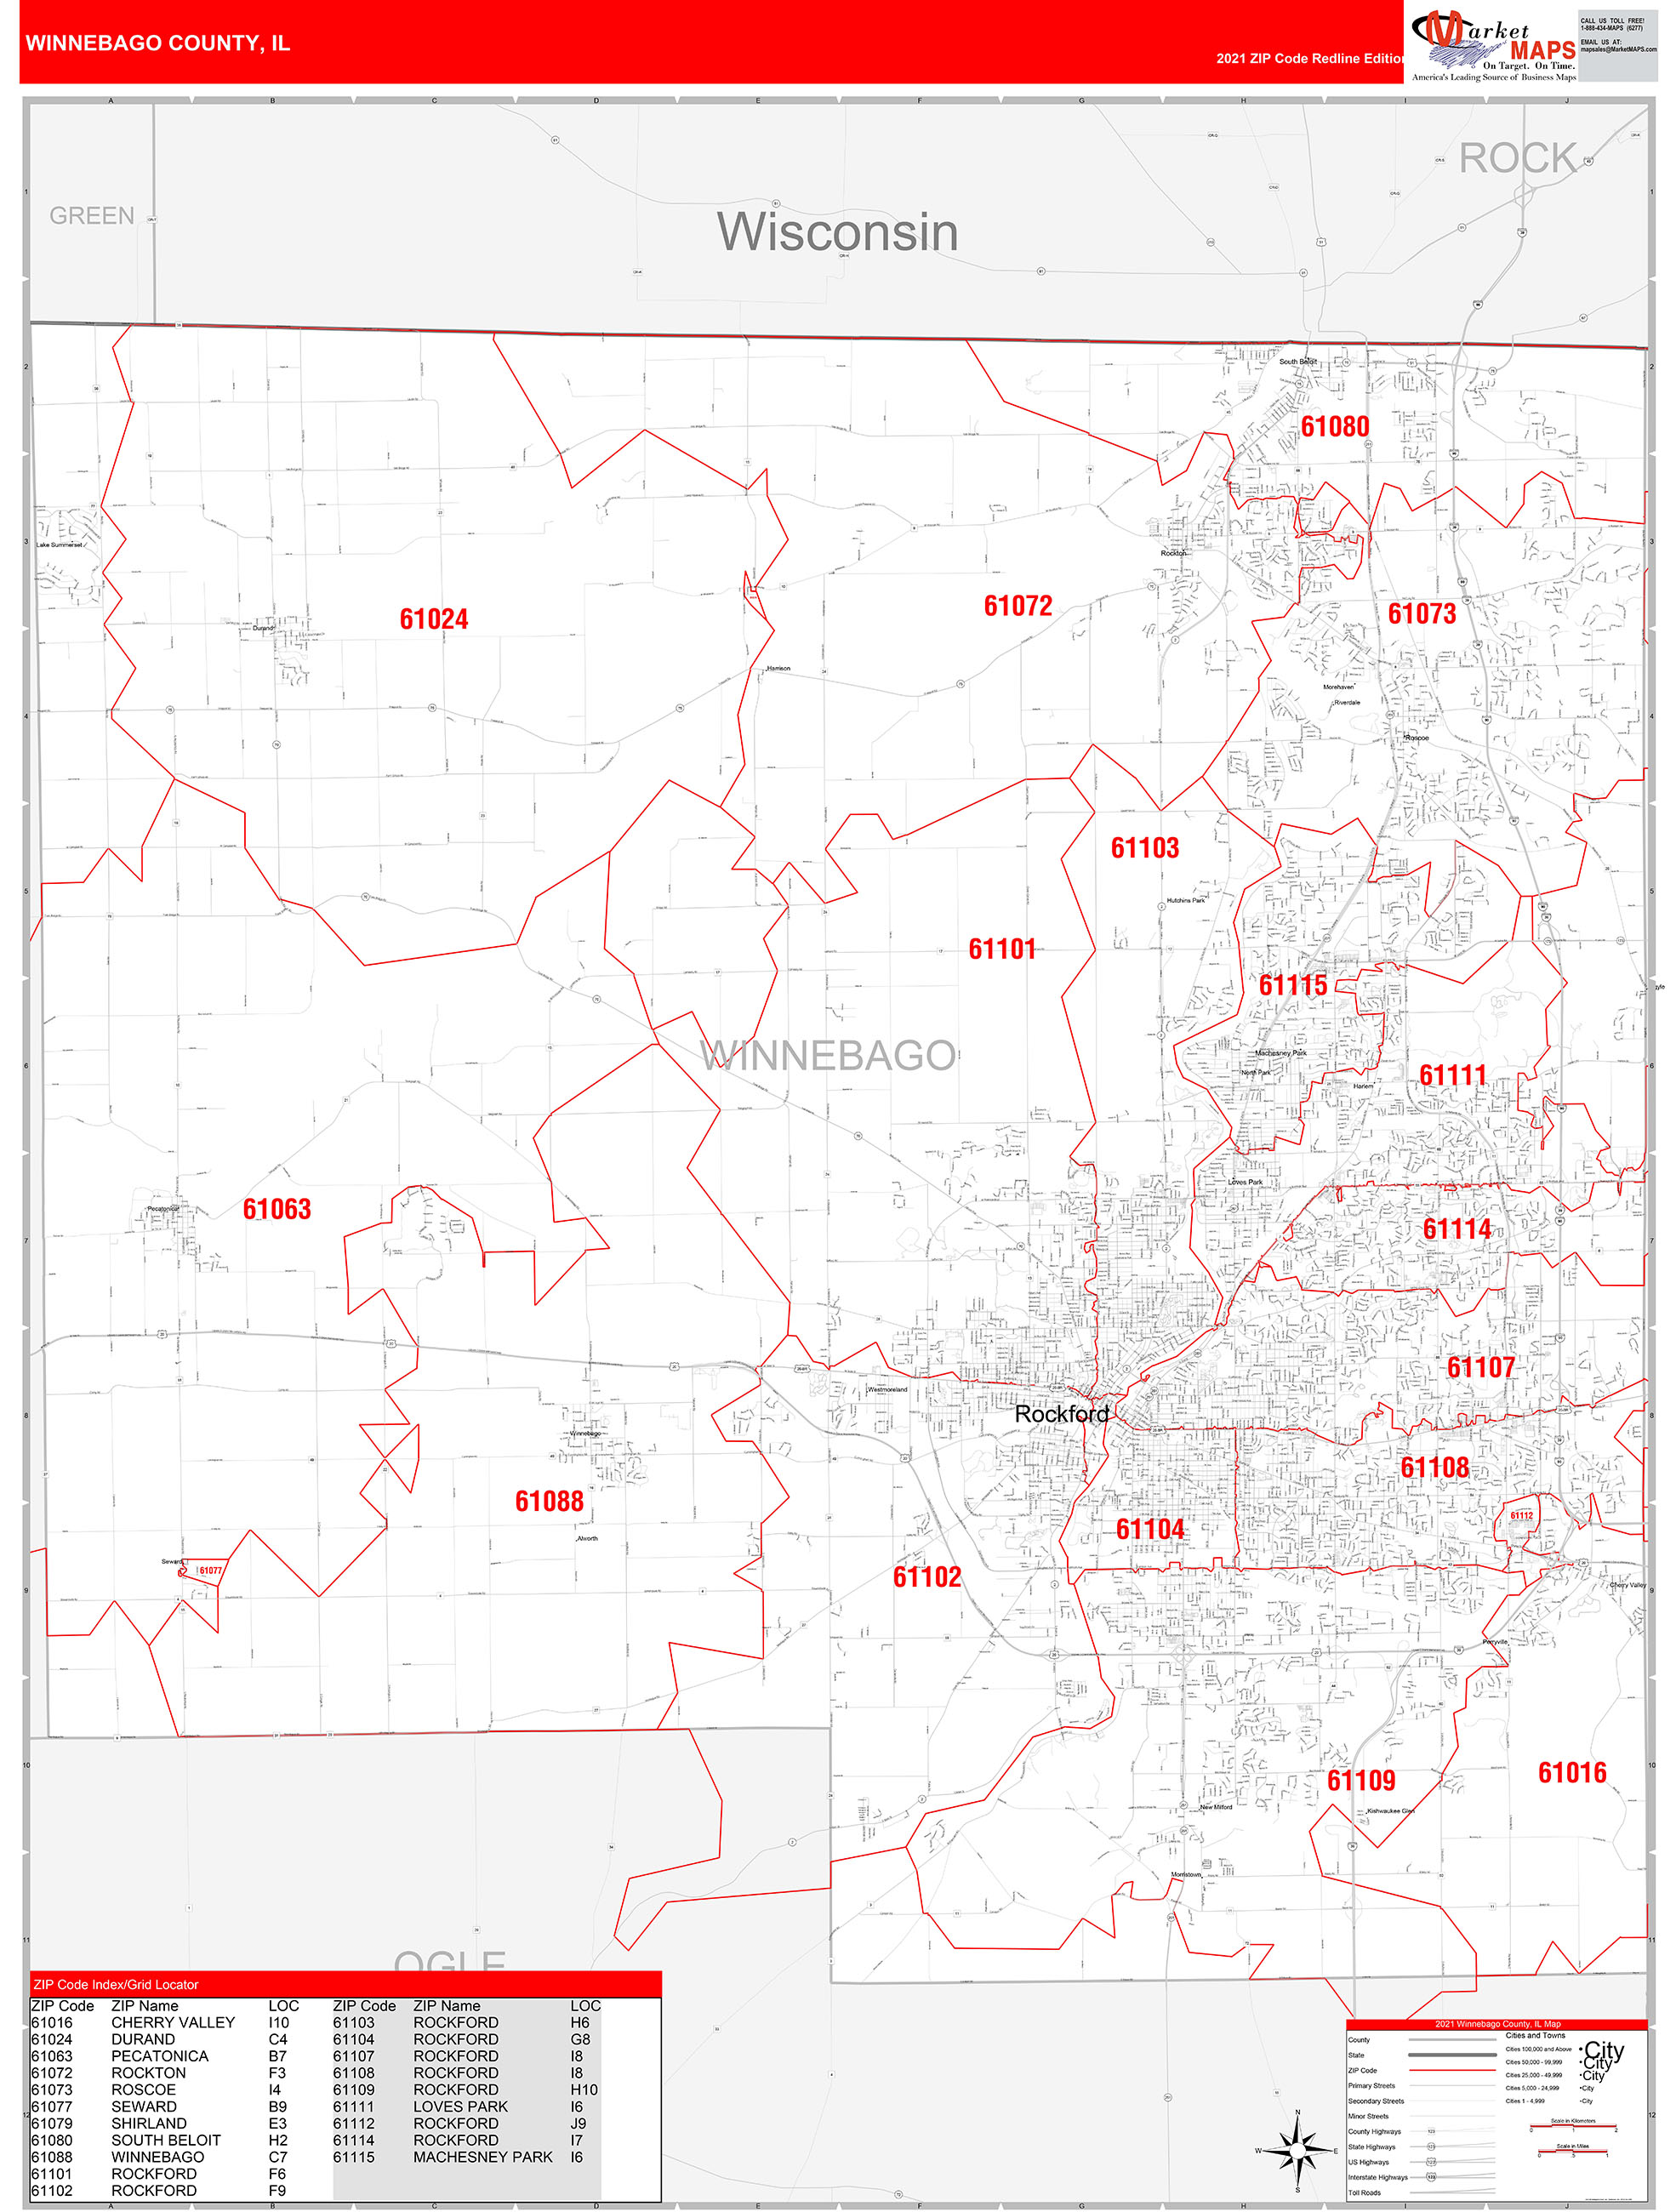 Winnebago County, IL Zip Code Wall Map Red Line Style by MarketMAPS